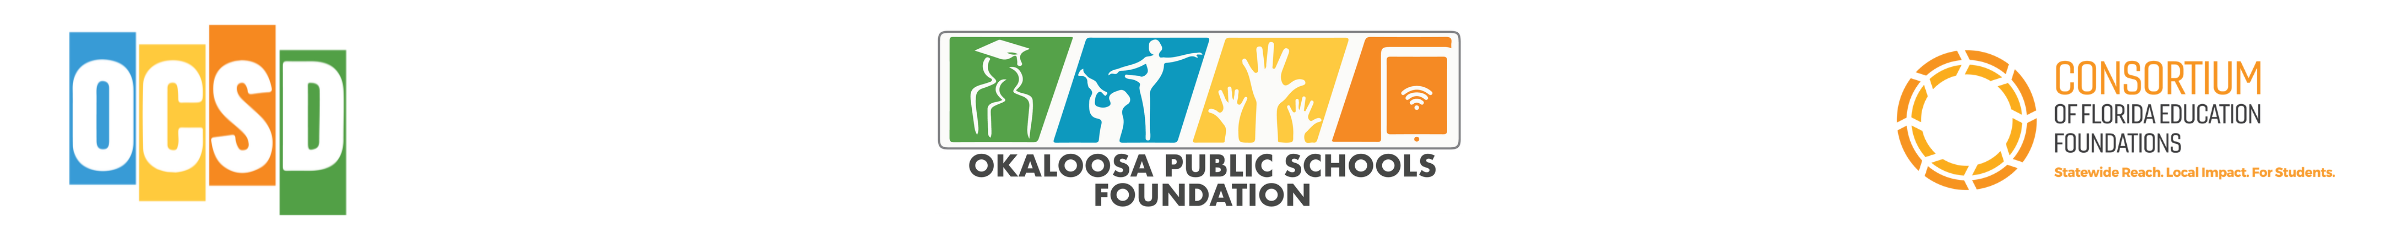 Okaloosa Public School Foundation logo